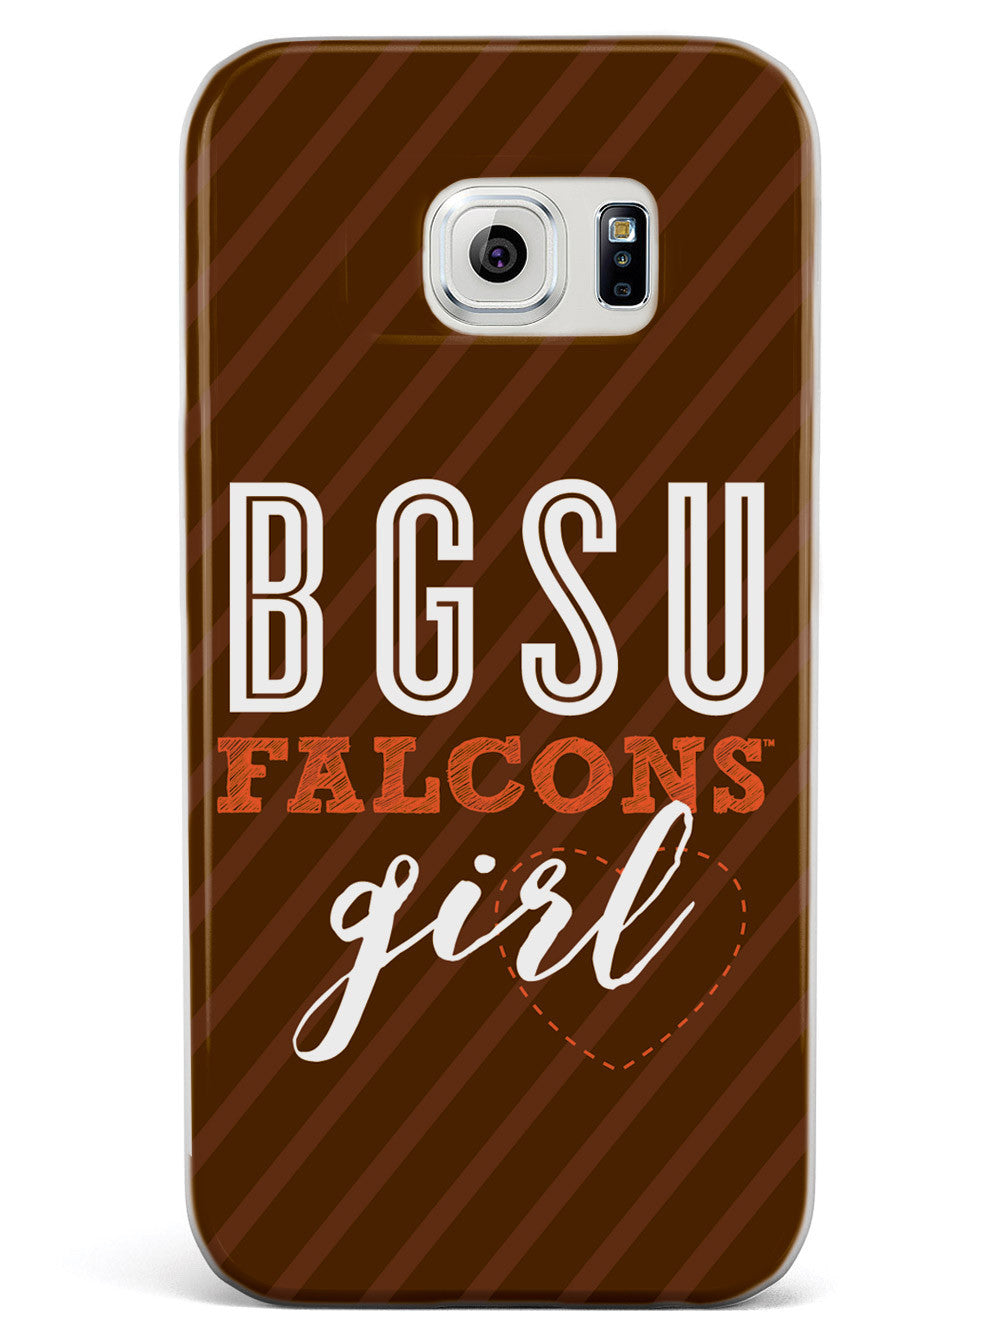 BGSU Falcons Girl Case